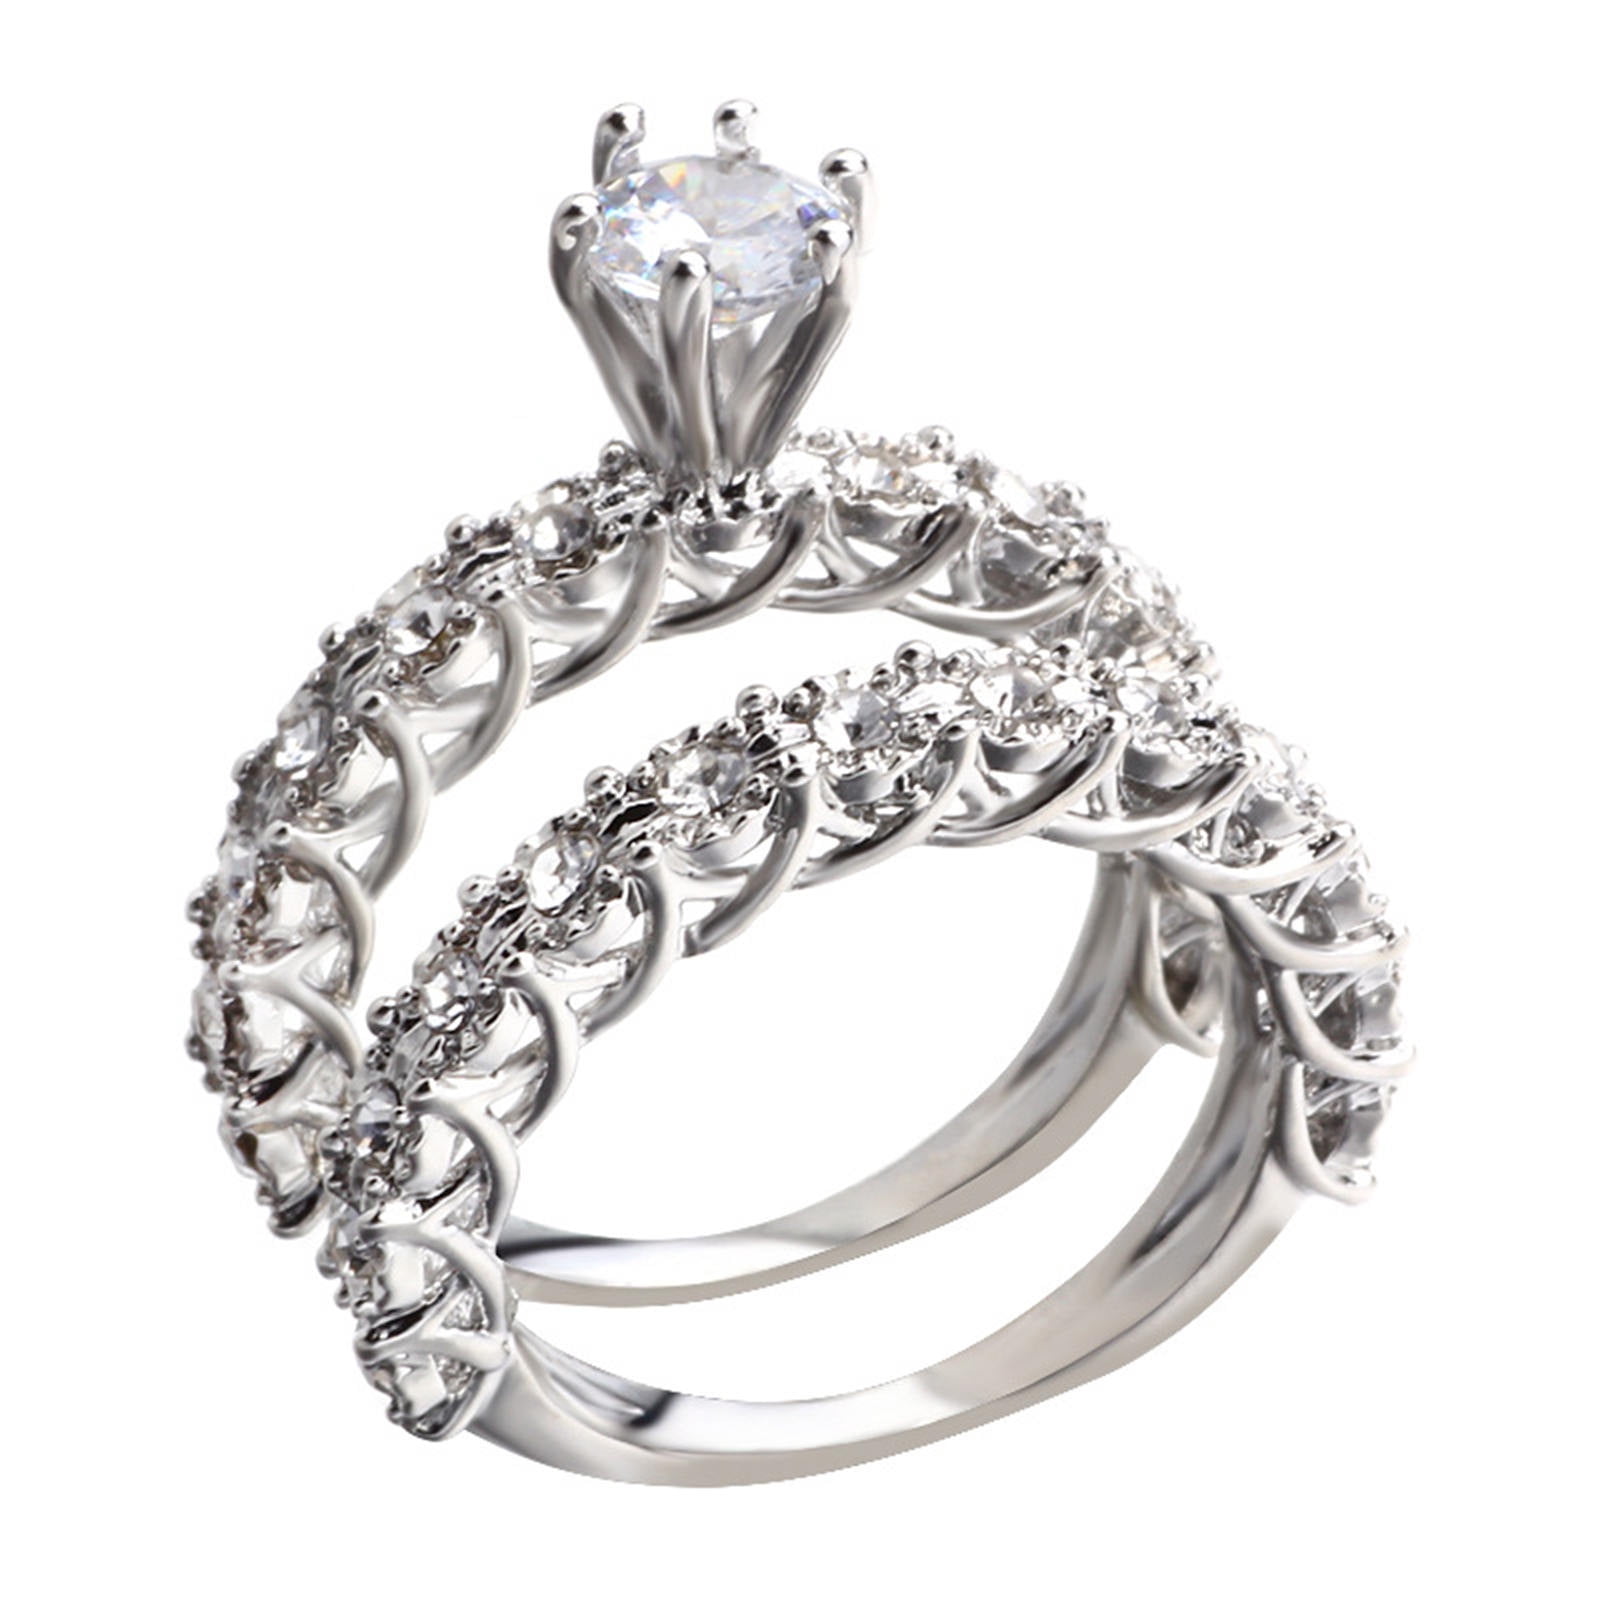 White Stone Ring - Buy White Stone Ring online in India